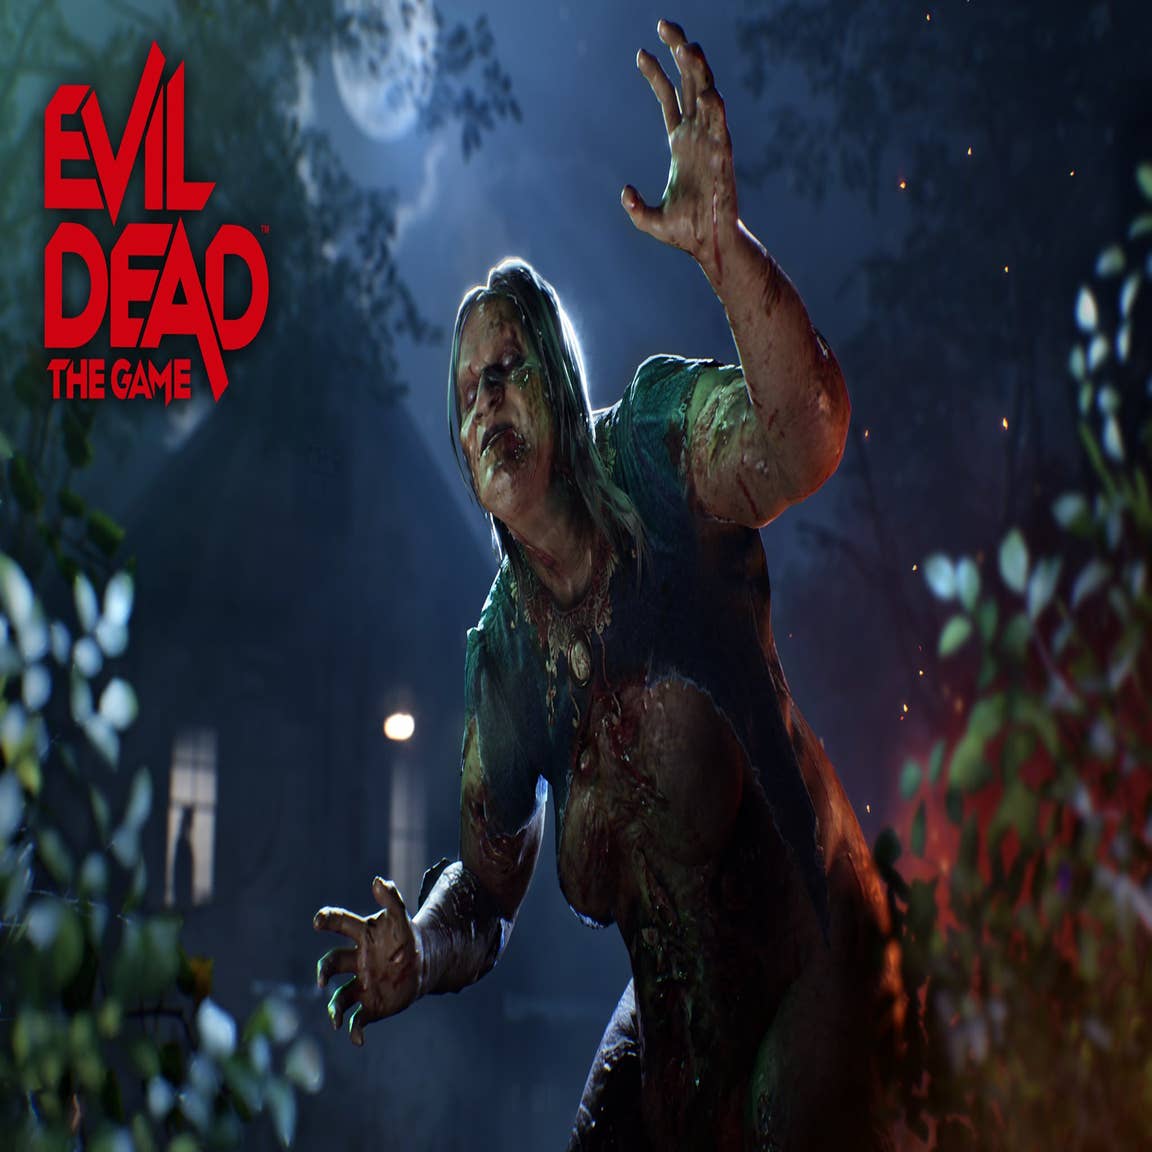 Evil Dead: The Game Review - An Asskicking, Asymmetrical Horrorfest